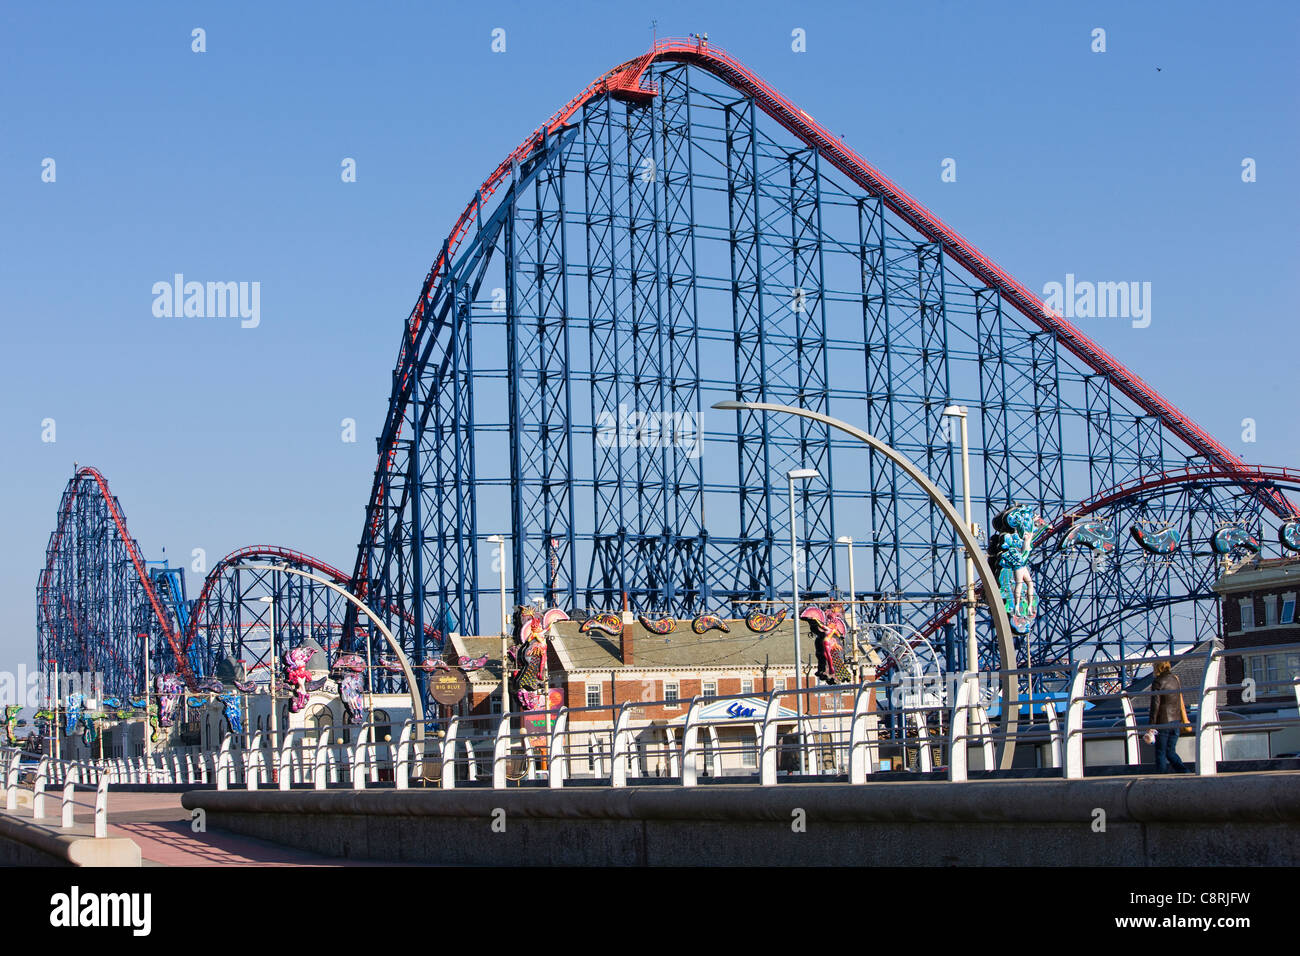 The Big One rollercoaster at Blackpool's Pleasure Beach, Blackpool, UK Stock Photo